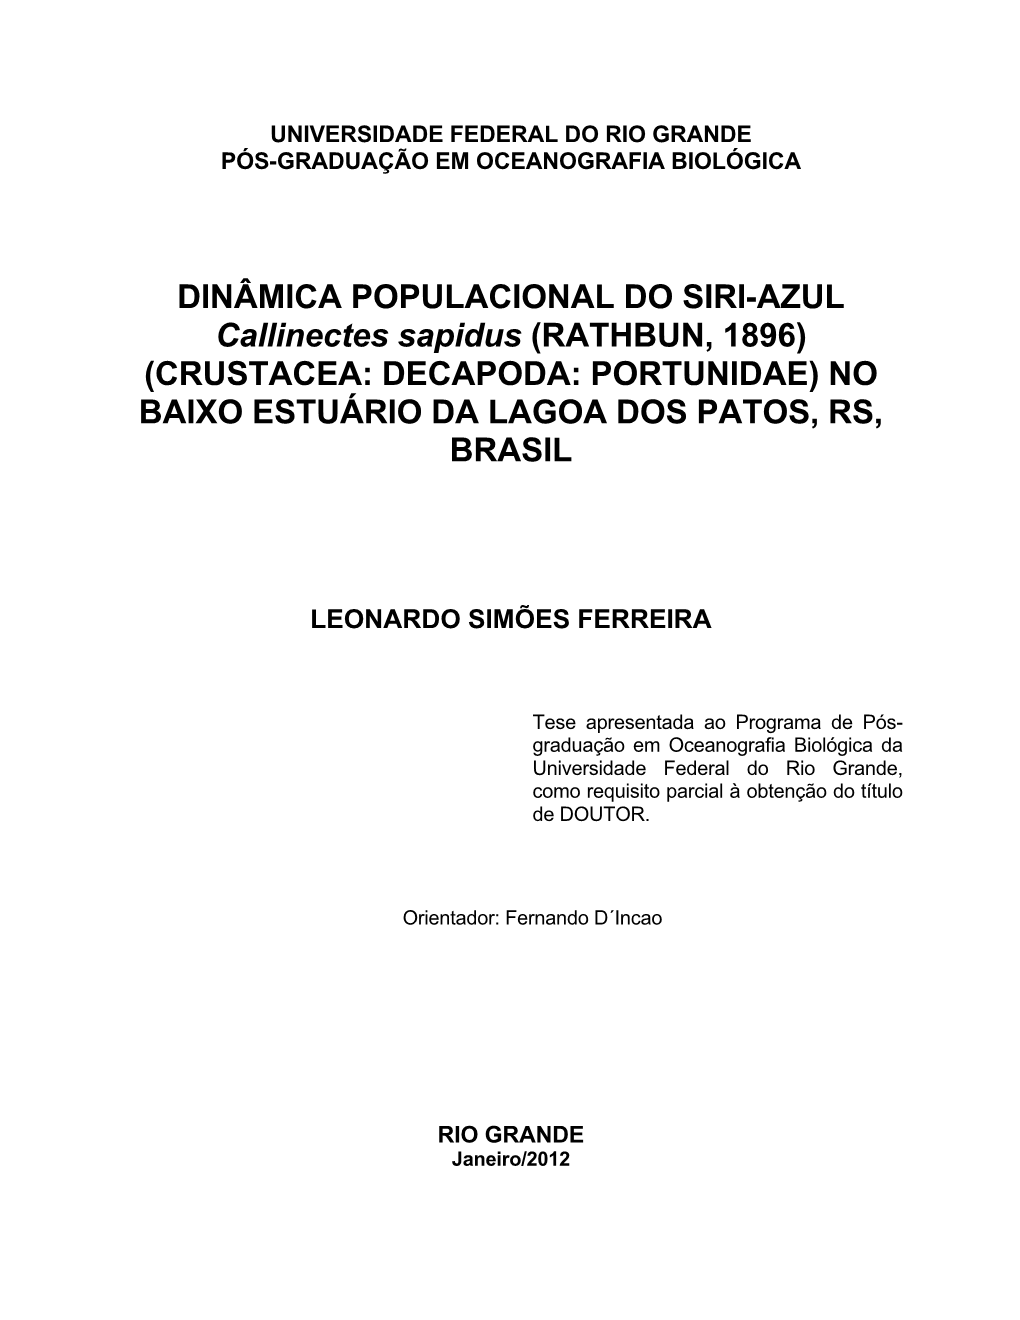 DINÂMICA POPULACIONAL DO SIRI-AZUL Callinectes Sapidus (RATHBUN, 1896) (CRUSTACEA: DECAPODA: PORTUNIDAE) NO BAIXO ESTUÁRIO DA LAGOA DOS PATOS, RS, BRASIL